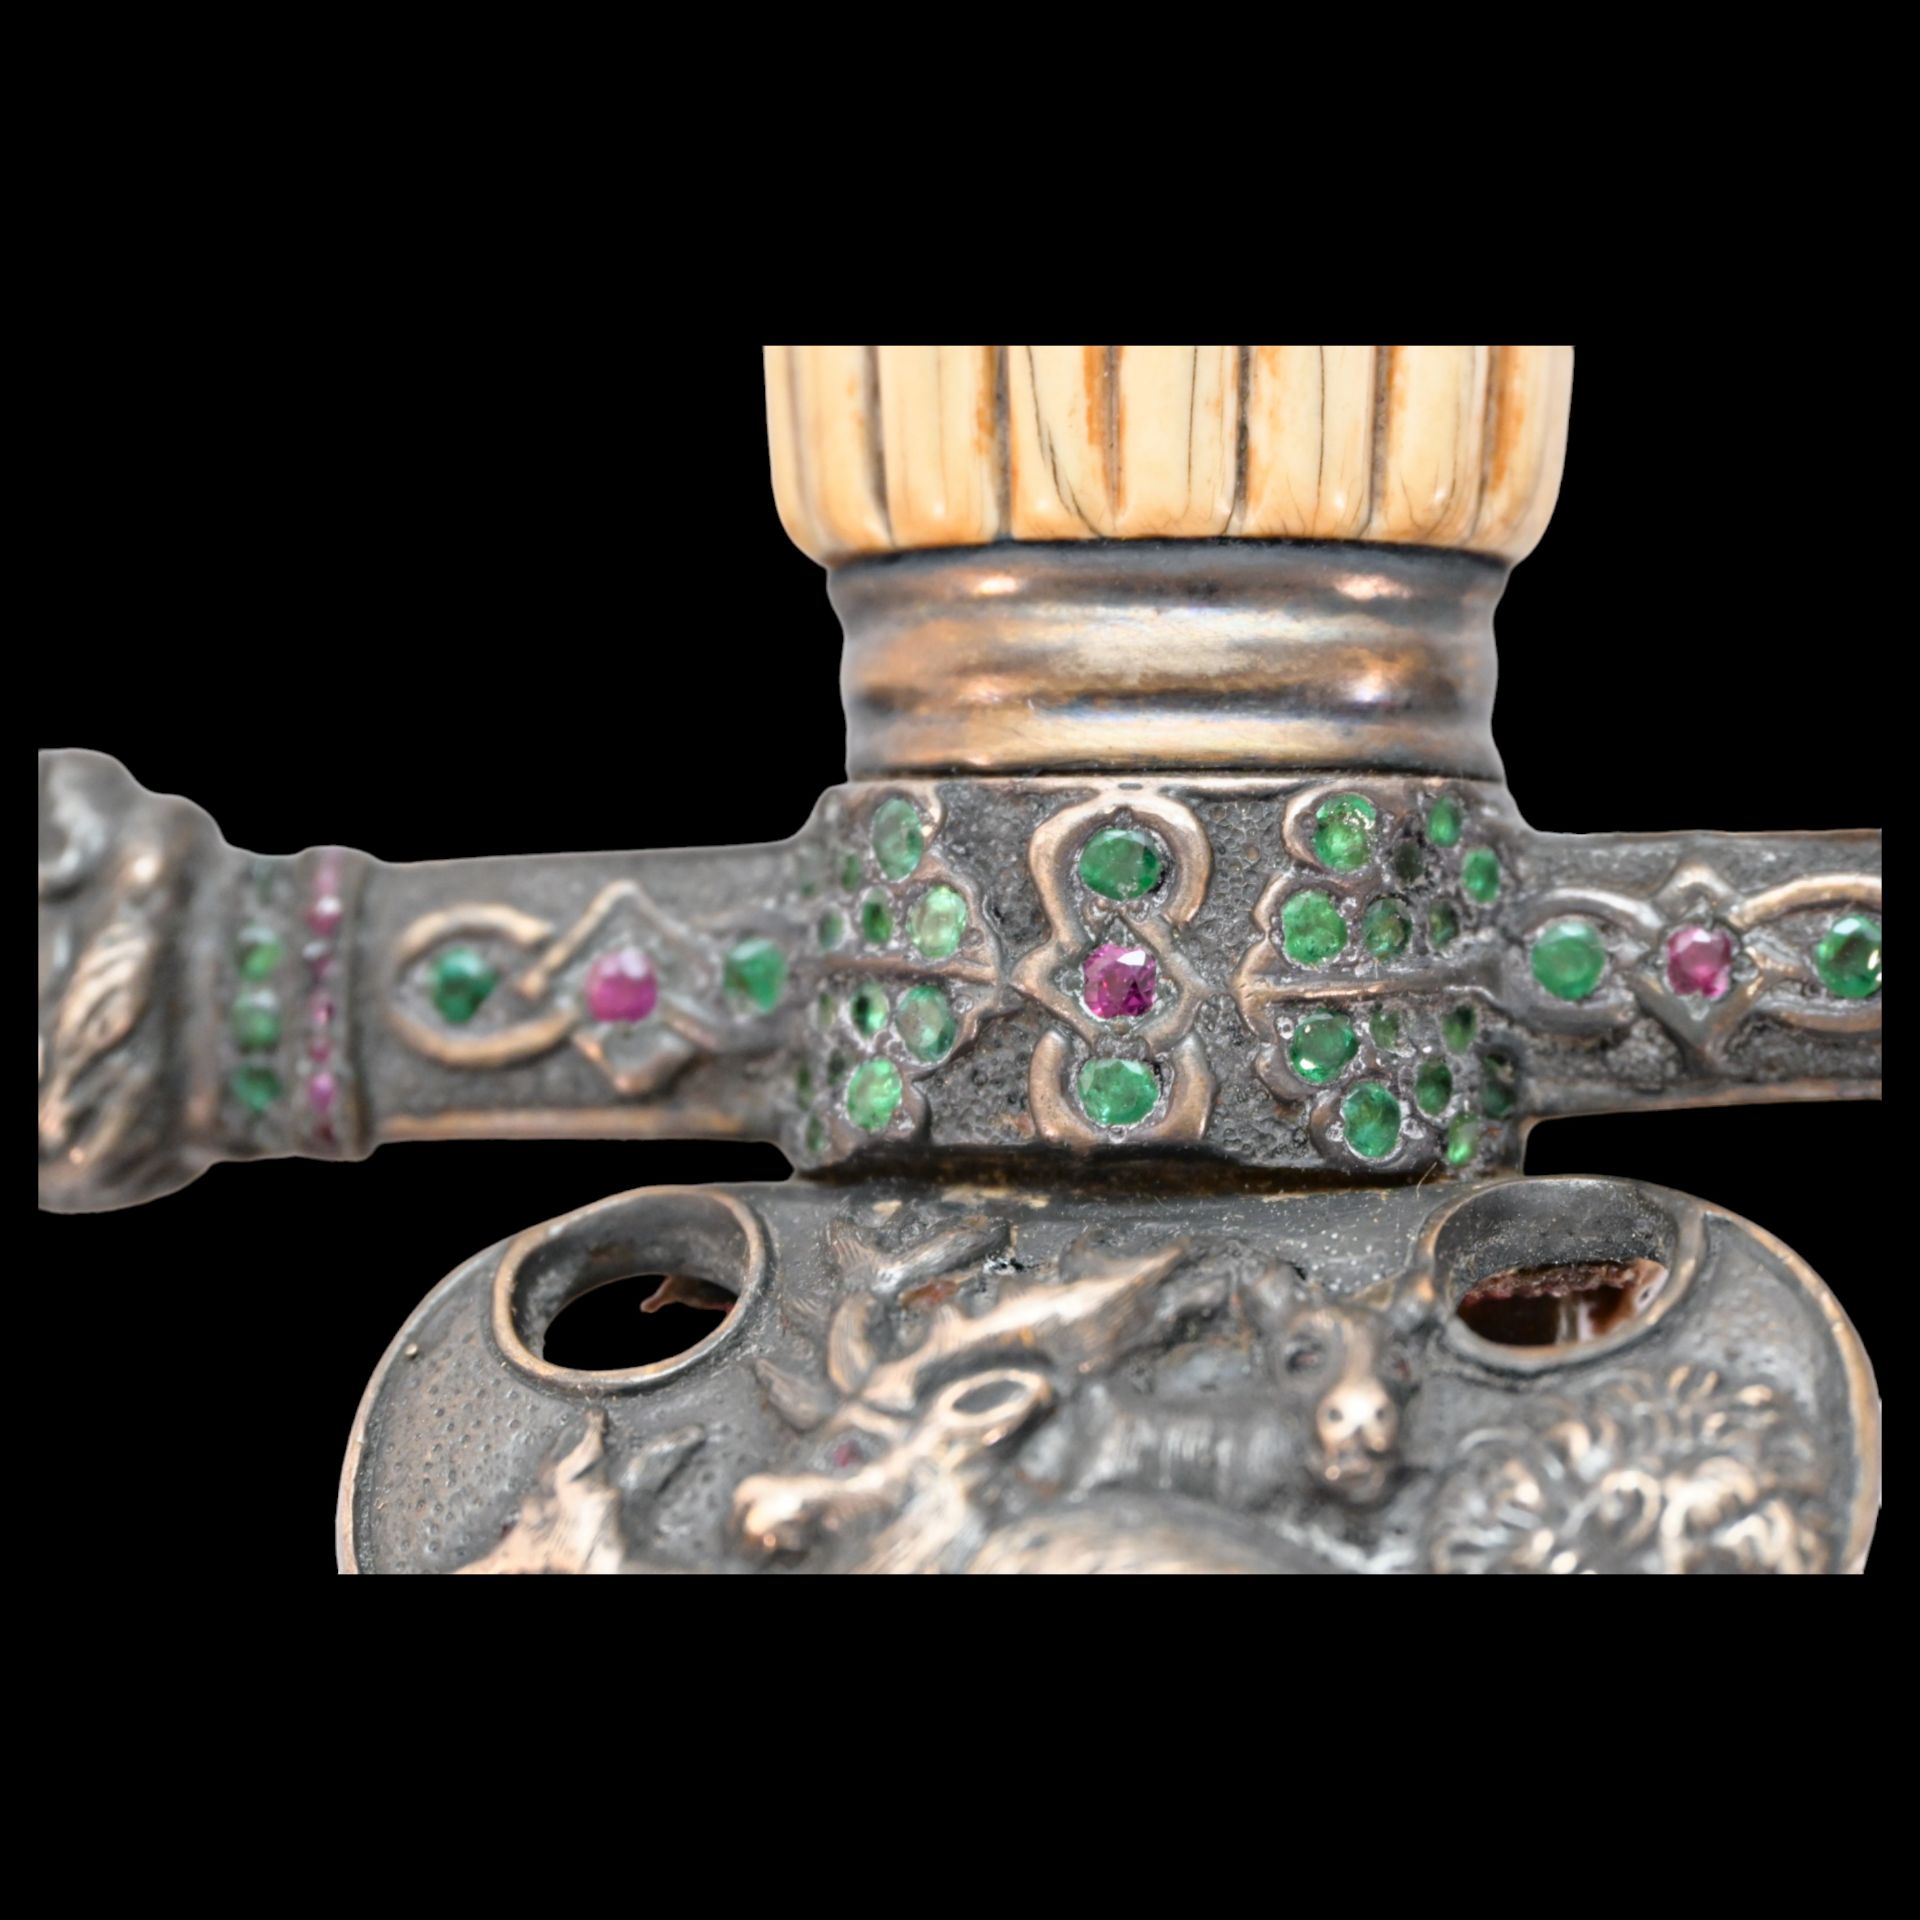 Rare hunting dagger, silver plated, gilding, precious stones, Russian Empire, 1890. - Image 7 of 29